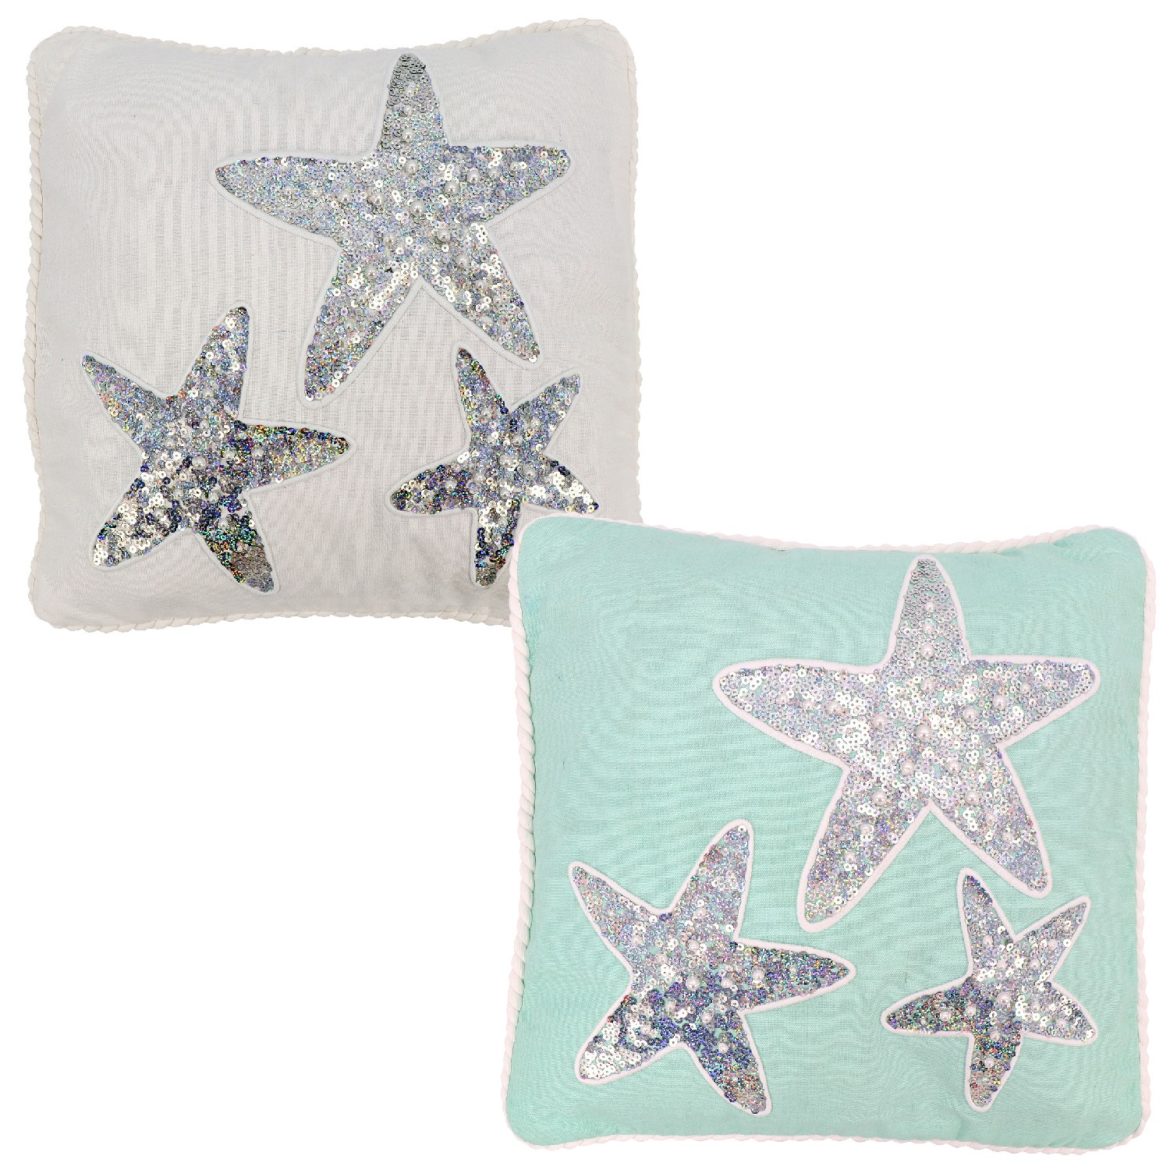 Dazzling-Starfish-Pillows-Sequin-16x16